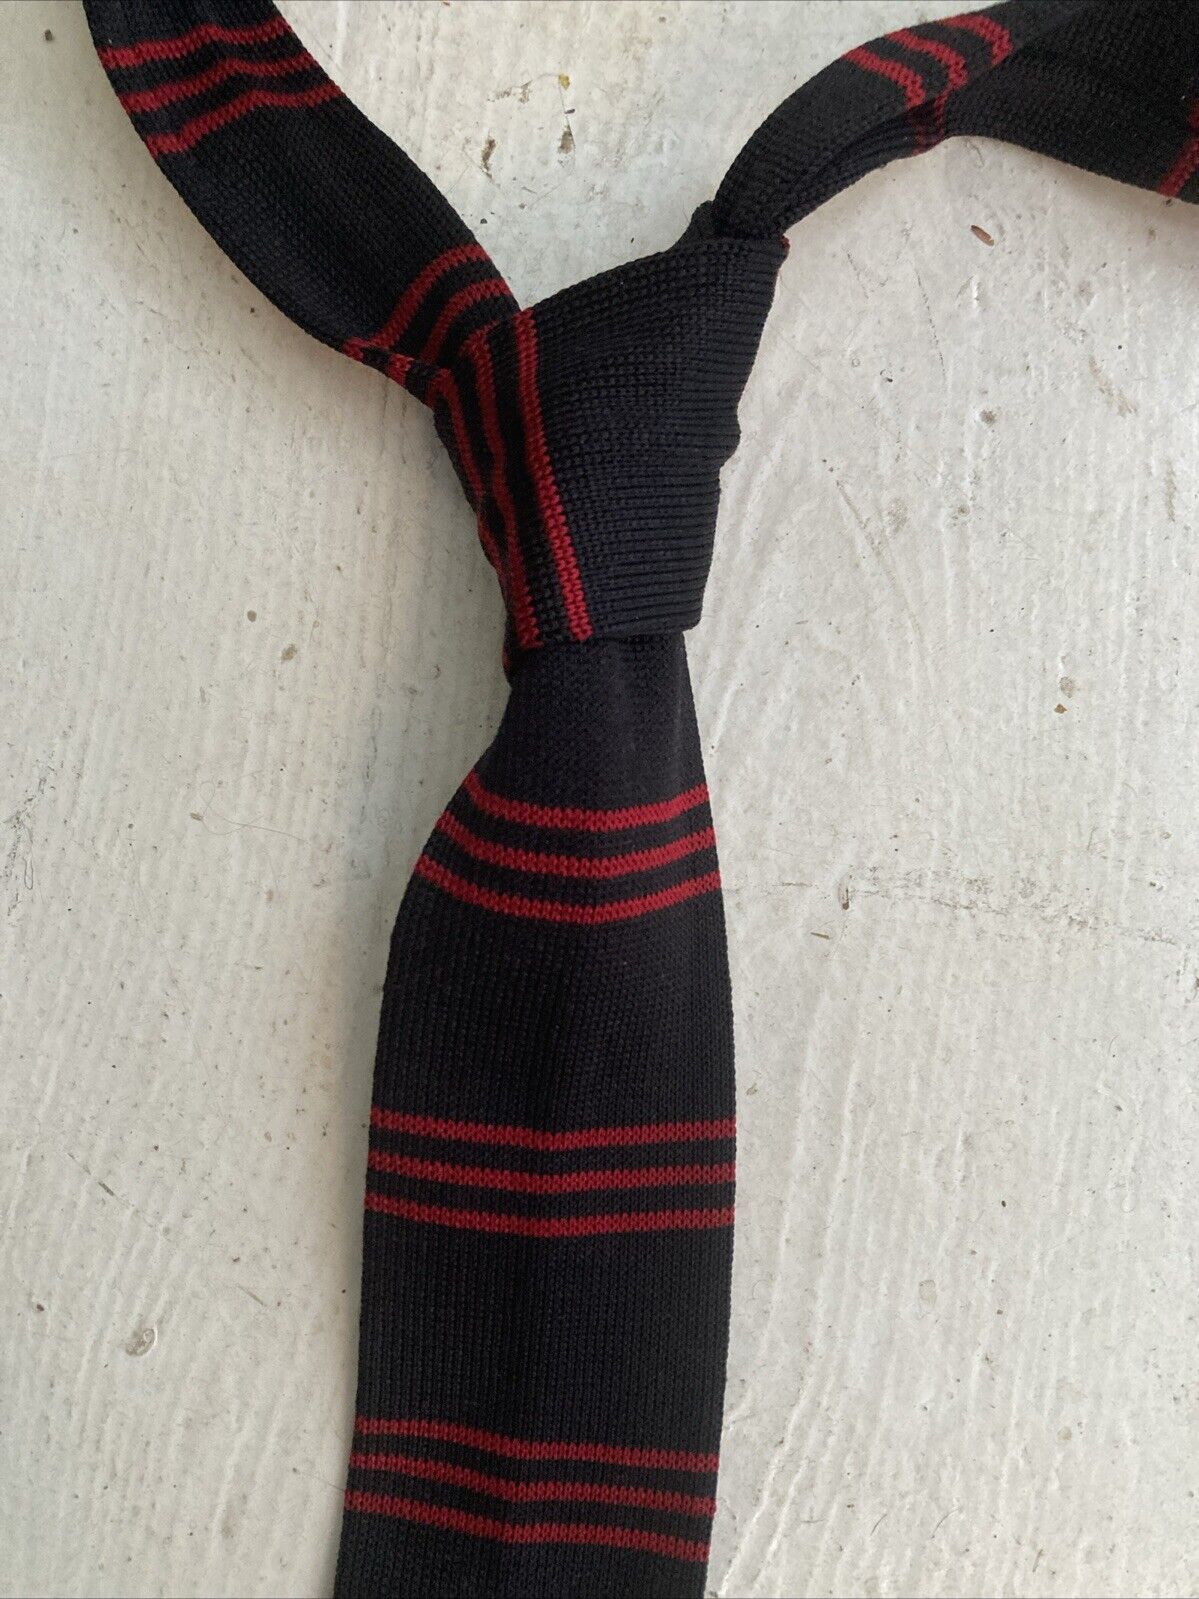 Yale Whiffenpoofs Tie Blunt Knit Stripes Haberdashery University Necktie EUC